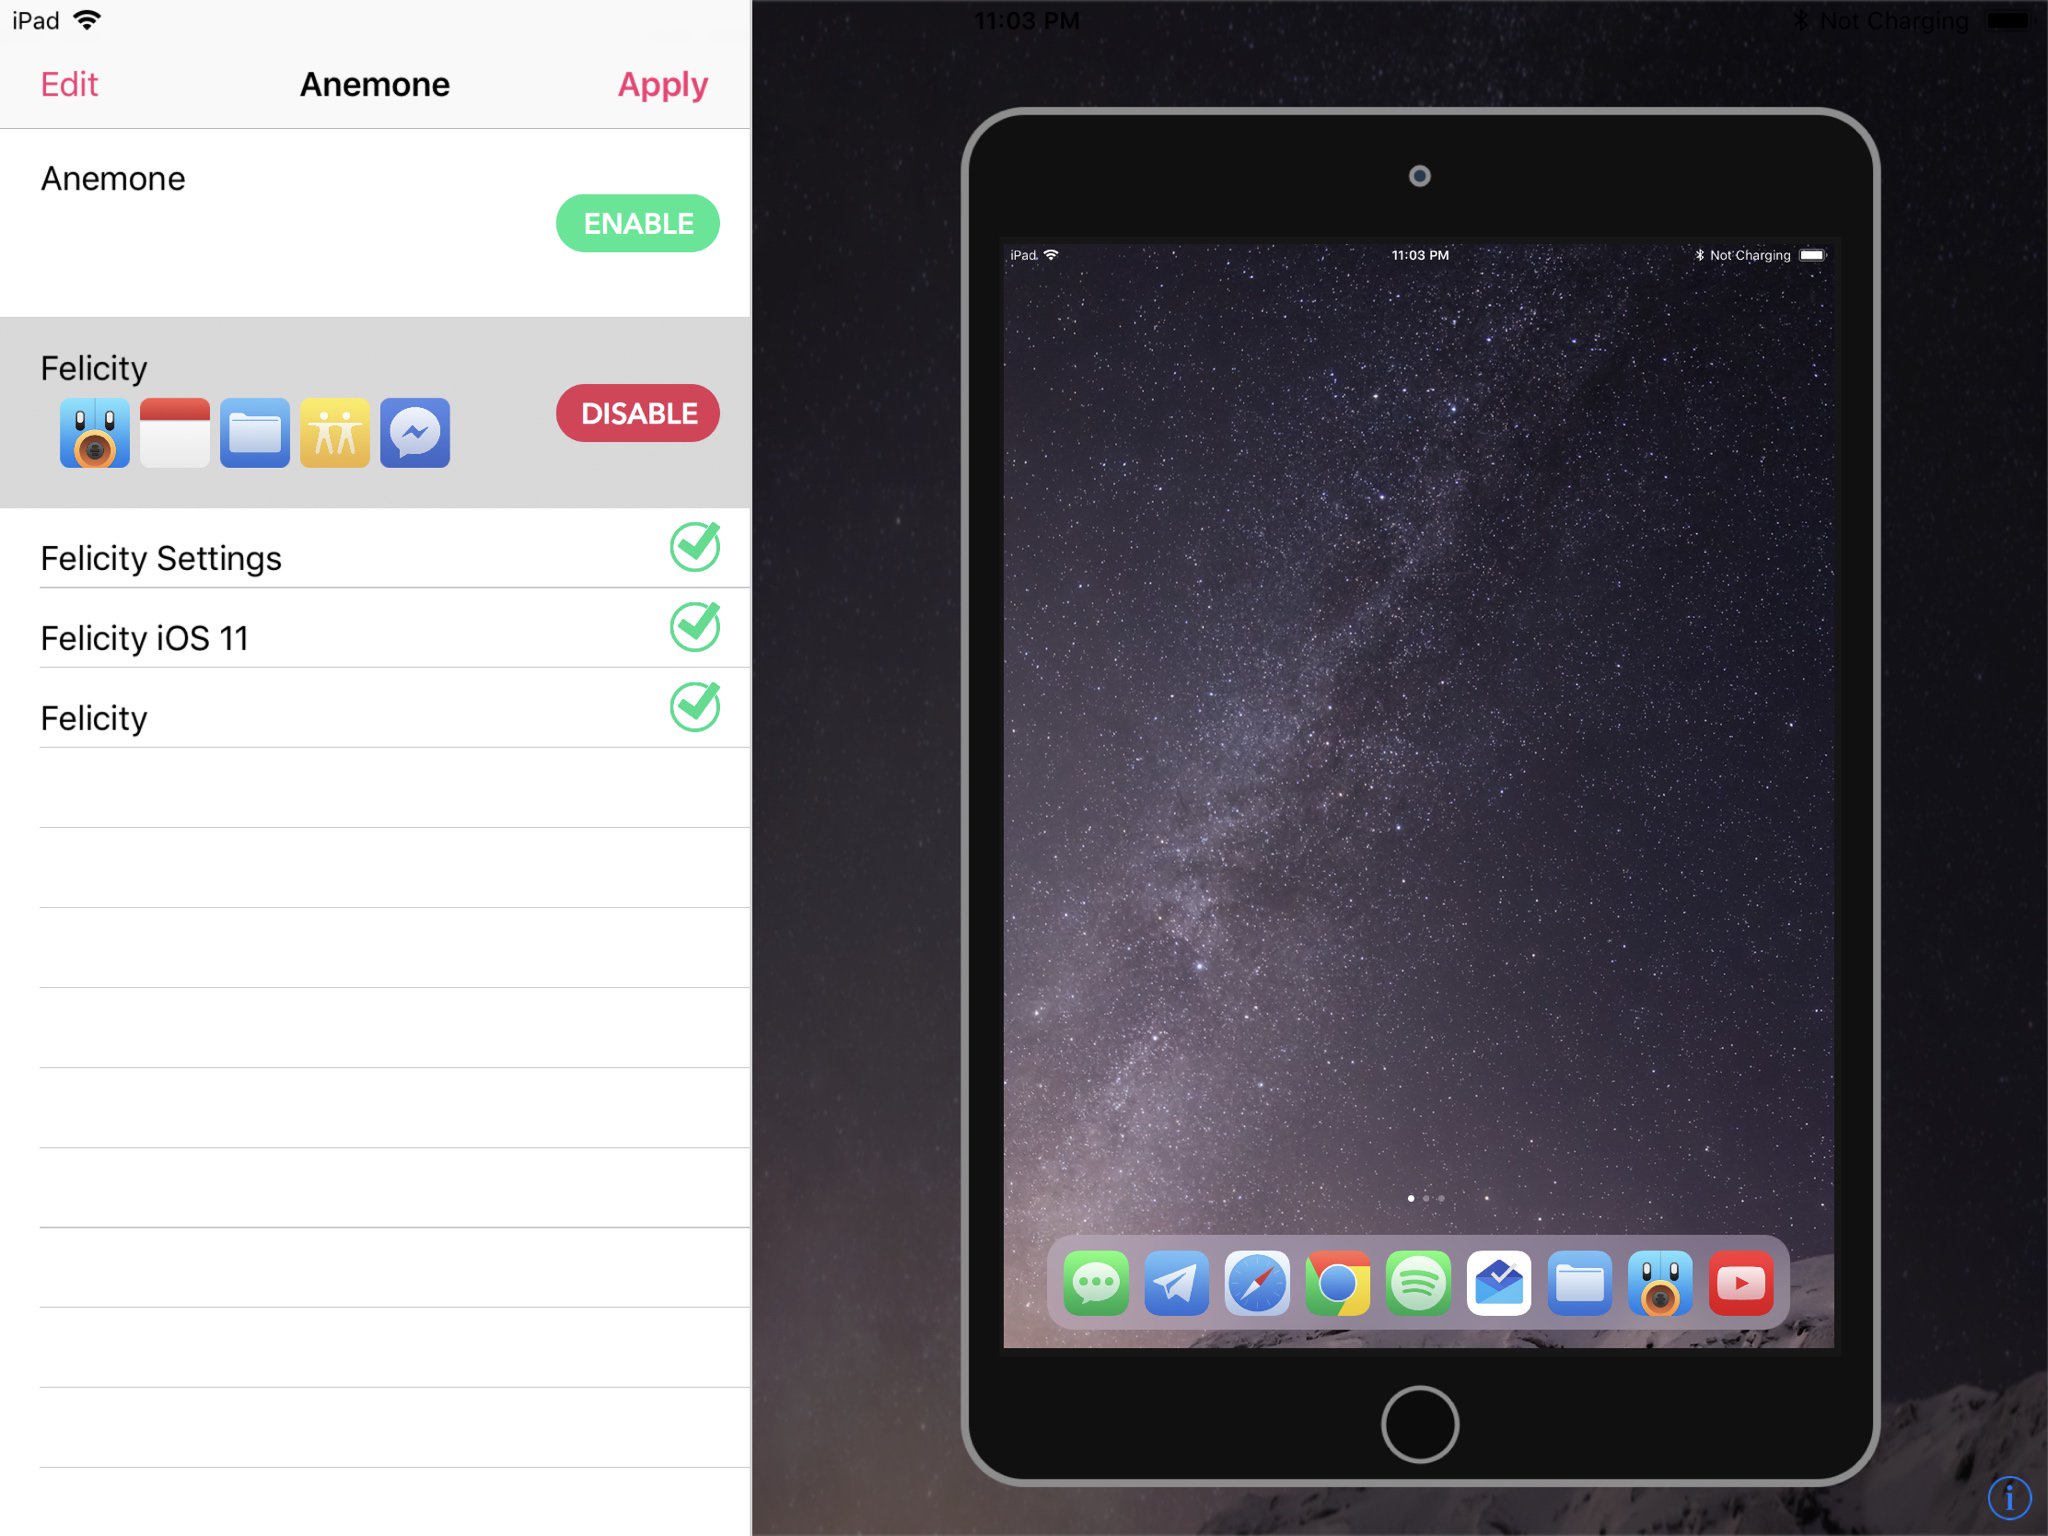 CoolStar Has Successfully Jailbroken iOS 11.3.1, Posts Screenshots, Provides More Details on Electra